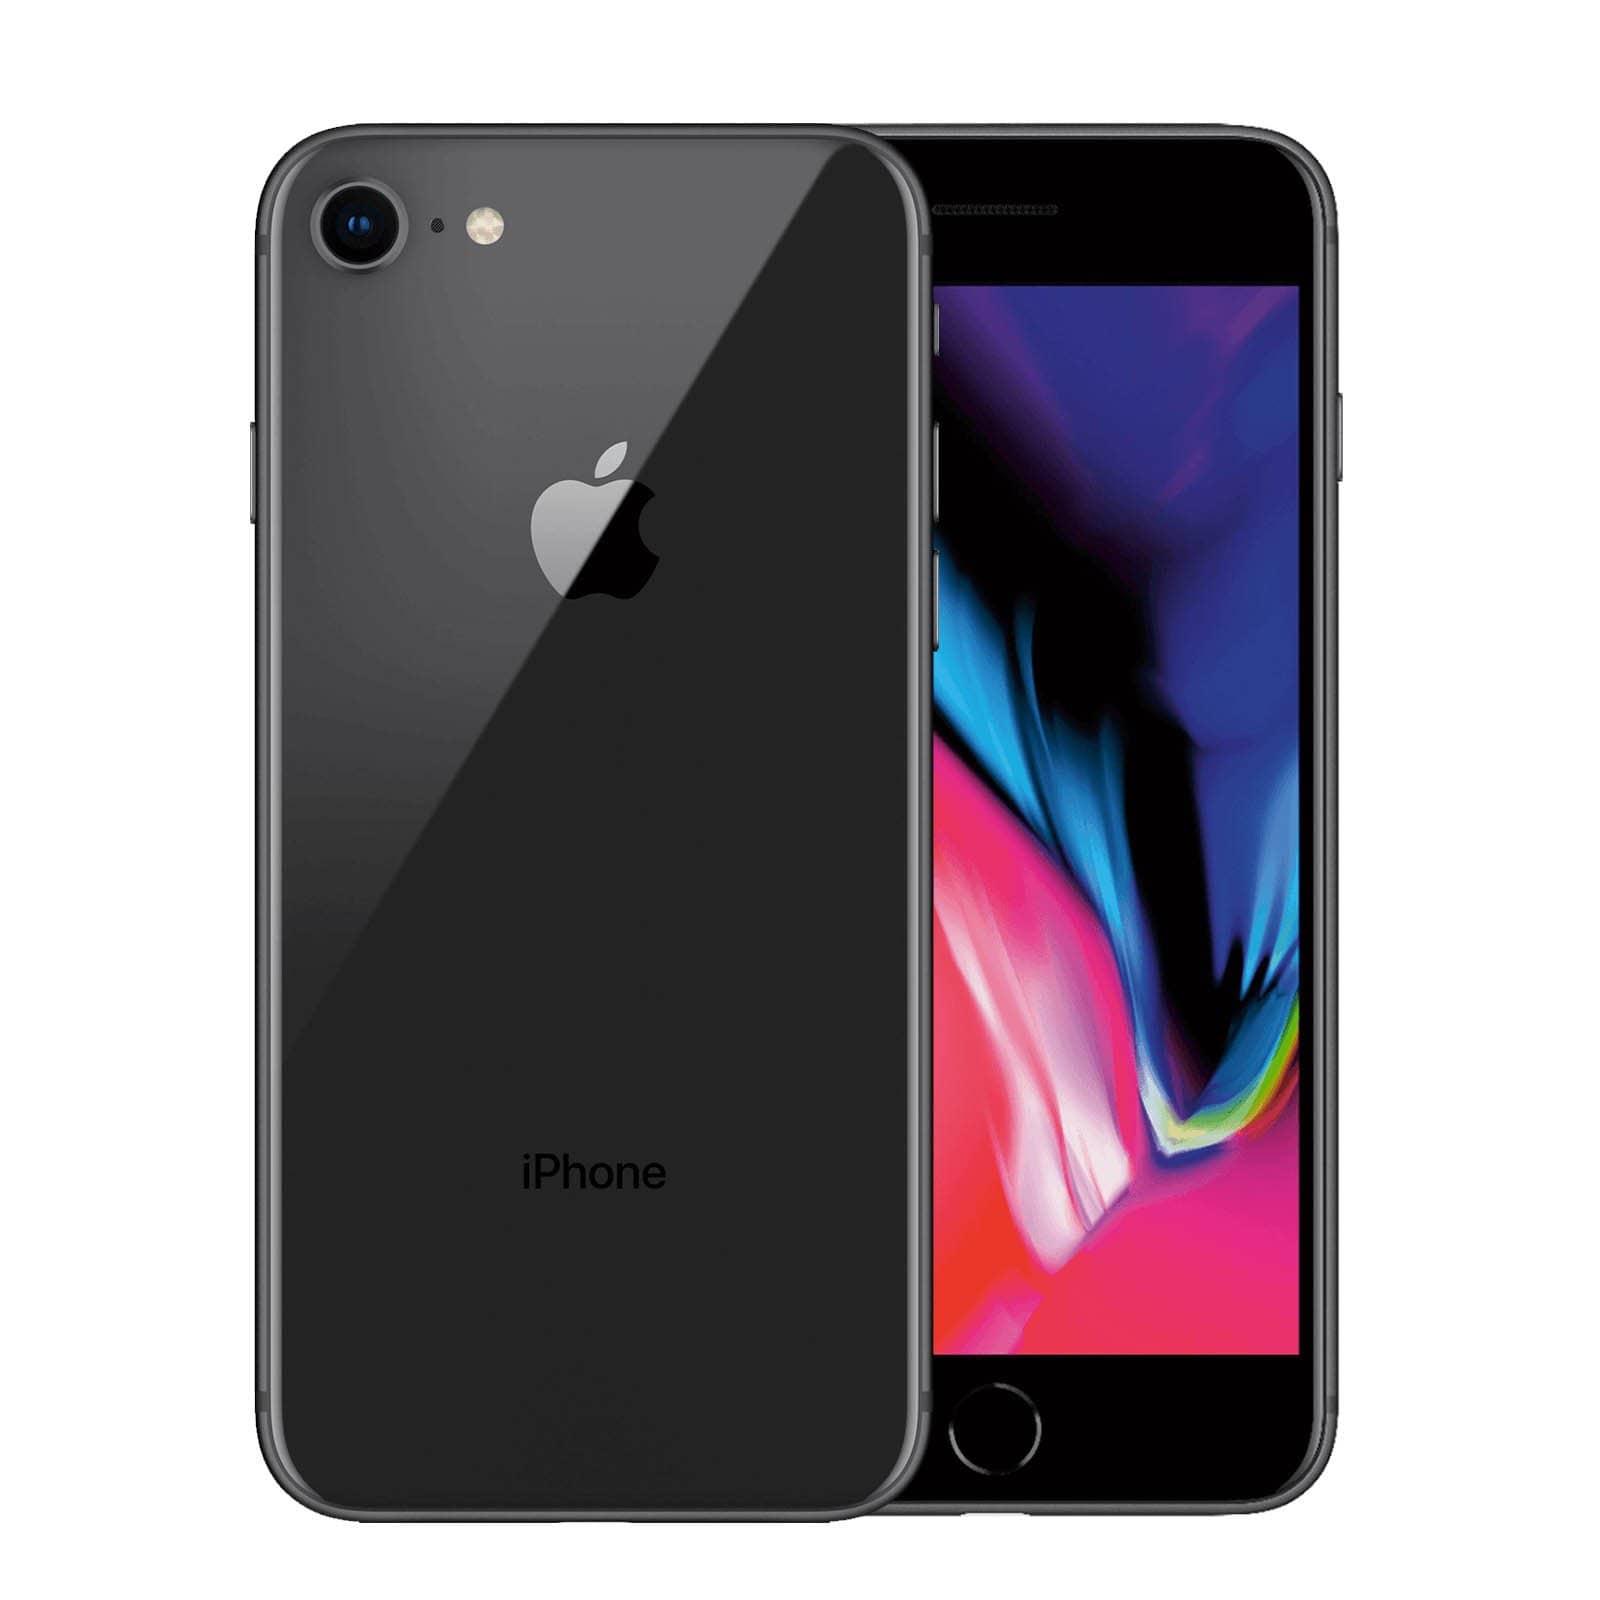 Apple iPhone 8 64GB Space Grey Pristine - Unlocked 64GB Space Grey Pristine